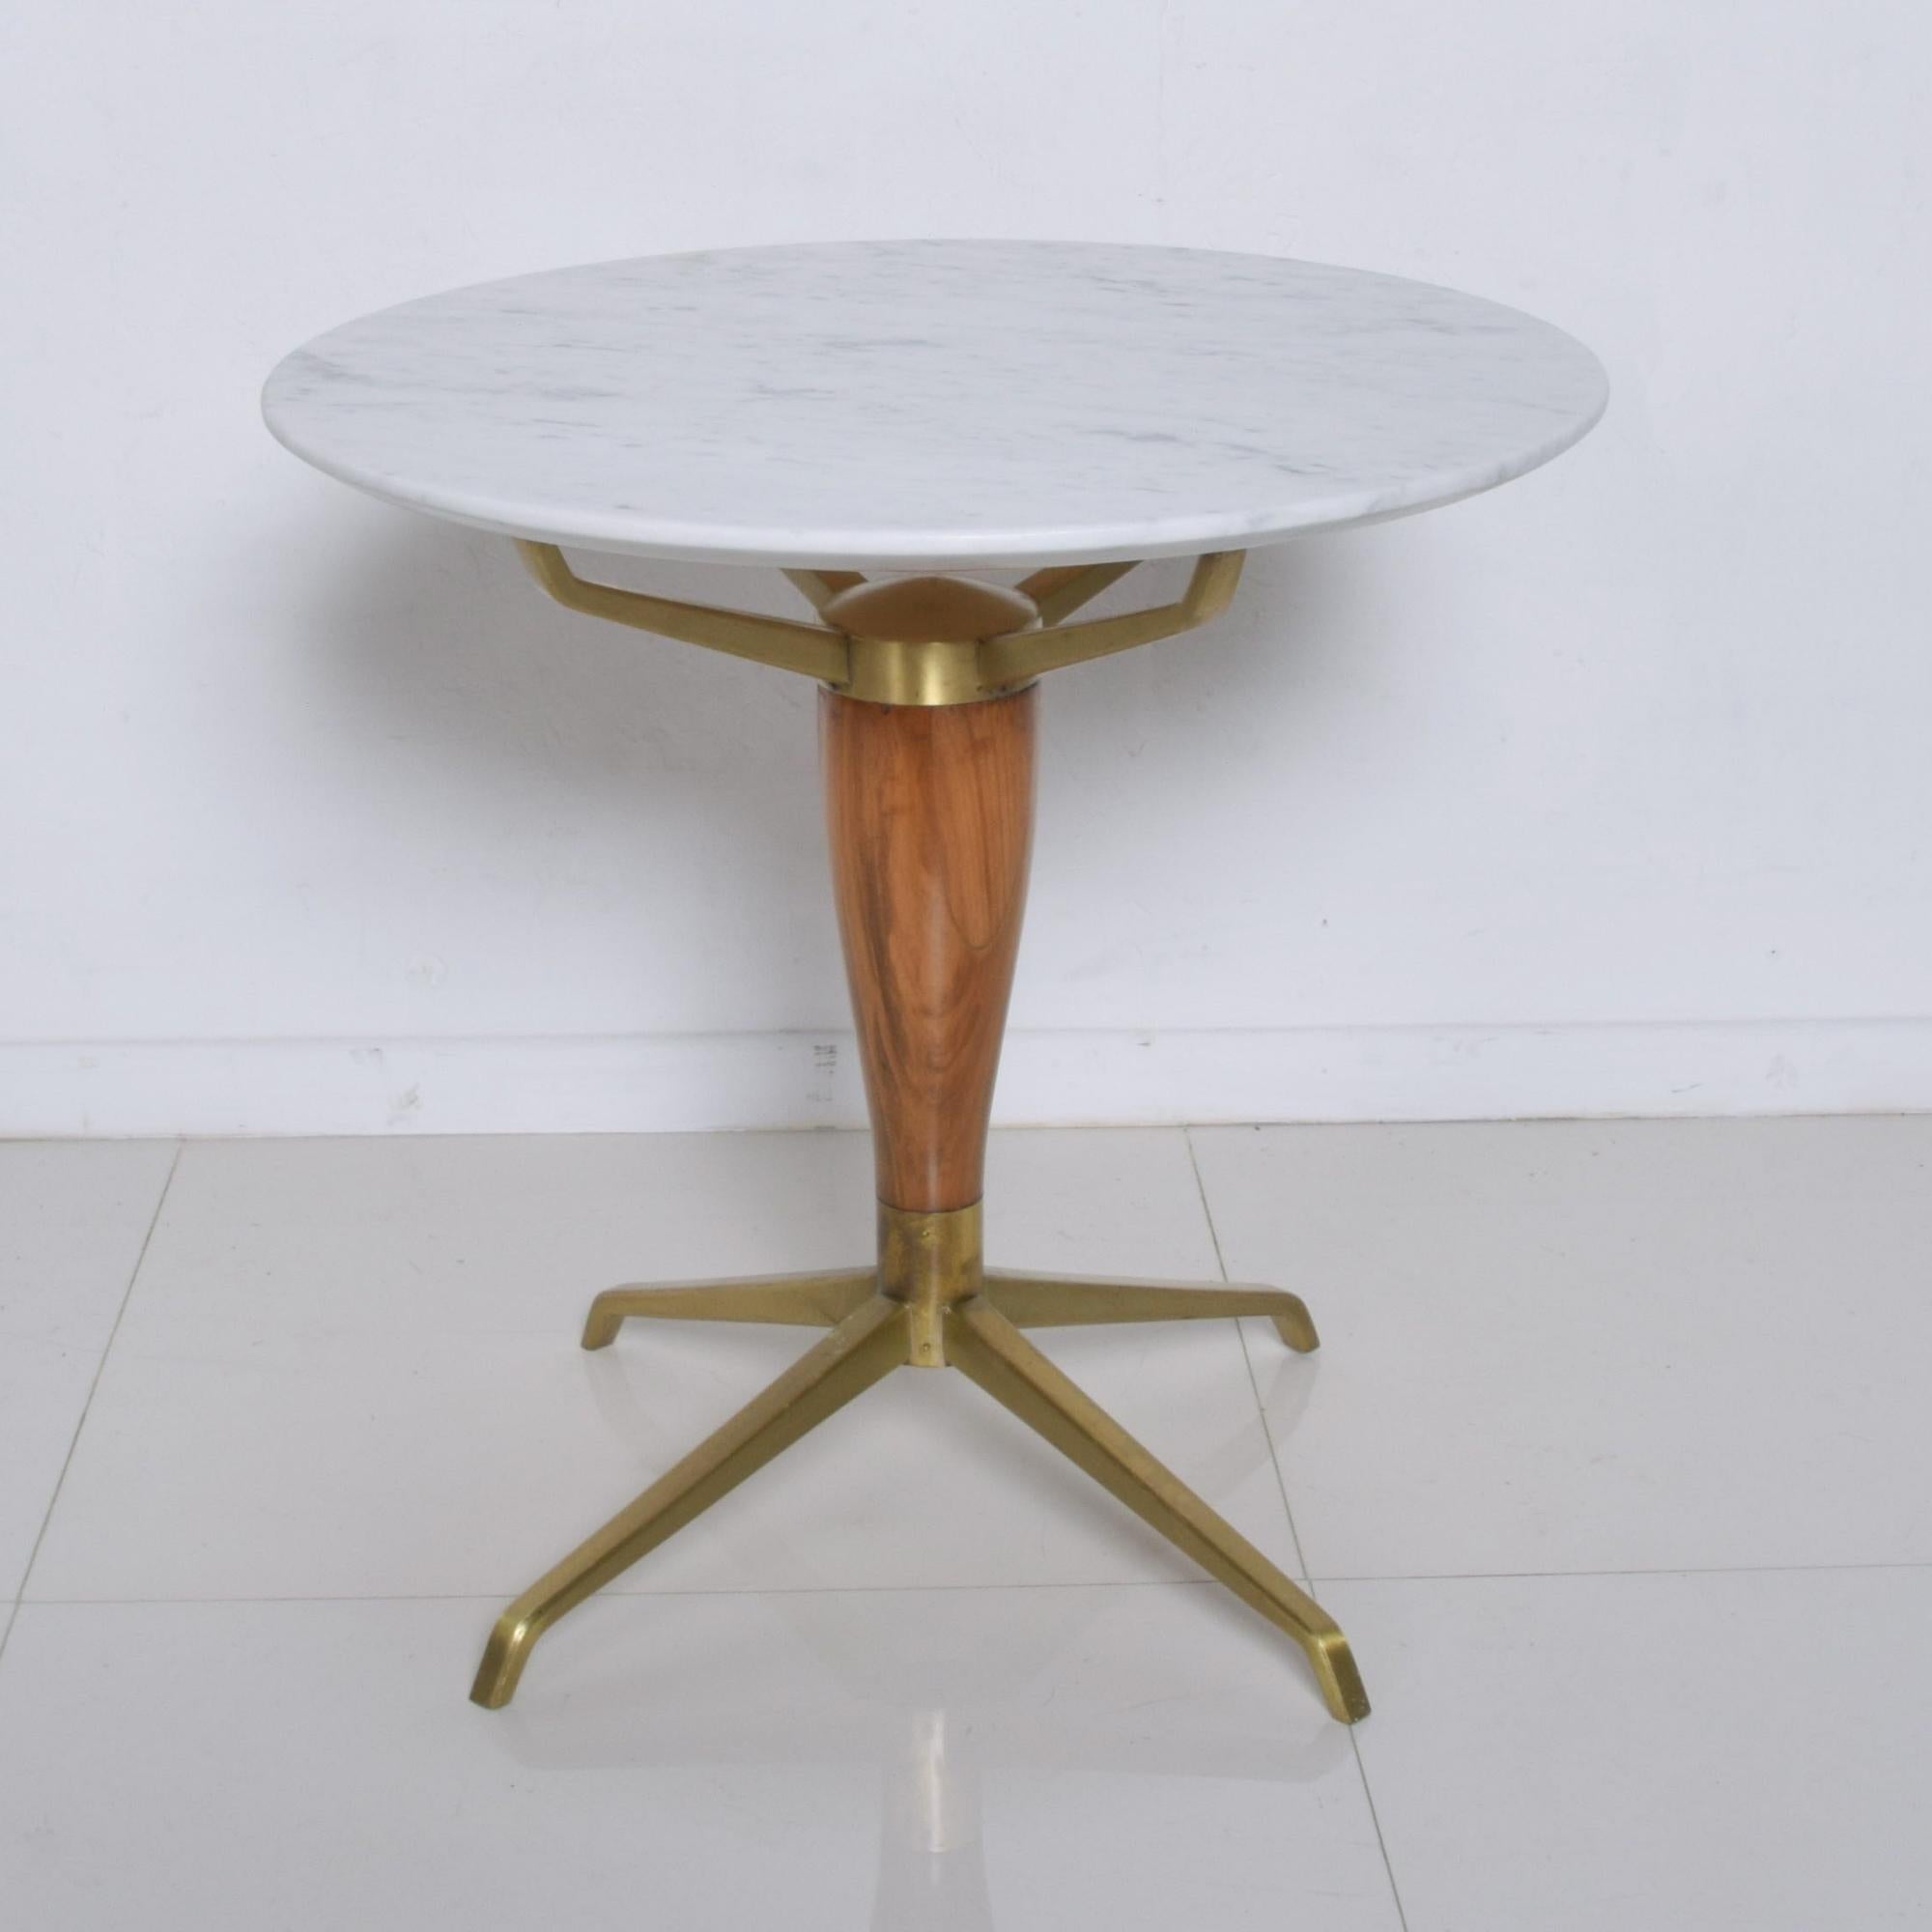 Mid-20th Century French Regency Gueridon Side Table Cedar Carrera Marble & Brass Arturo Pani 1950